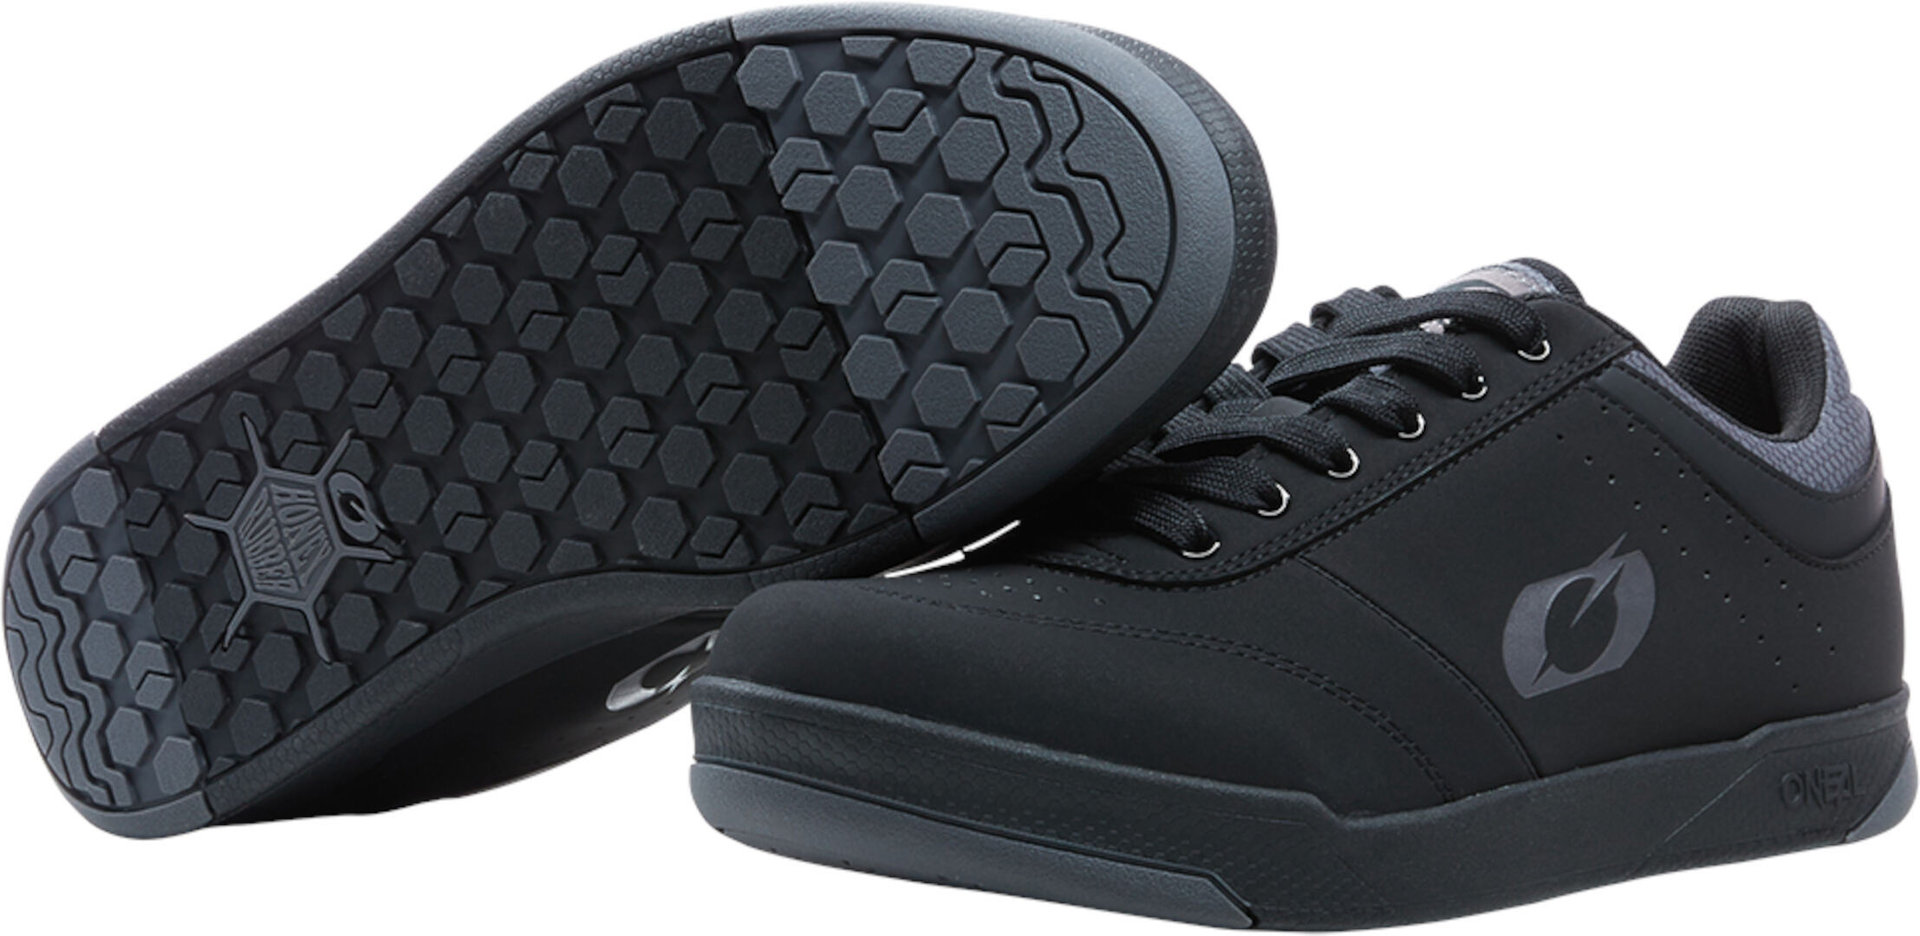 Oneal Pumps Flat V.22 Schuhe, schwarz-grau, Größe 46, schwarz-grau, Größe 46